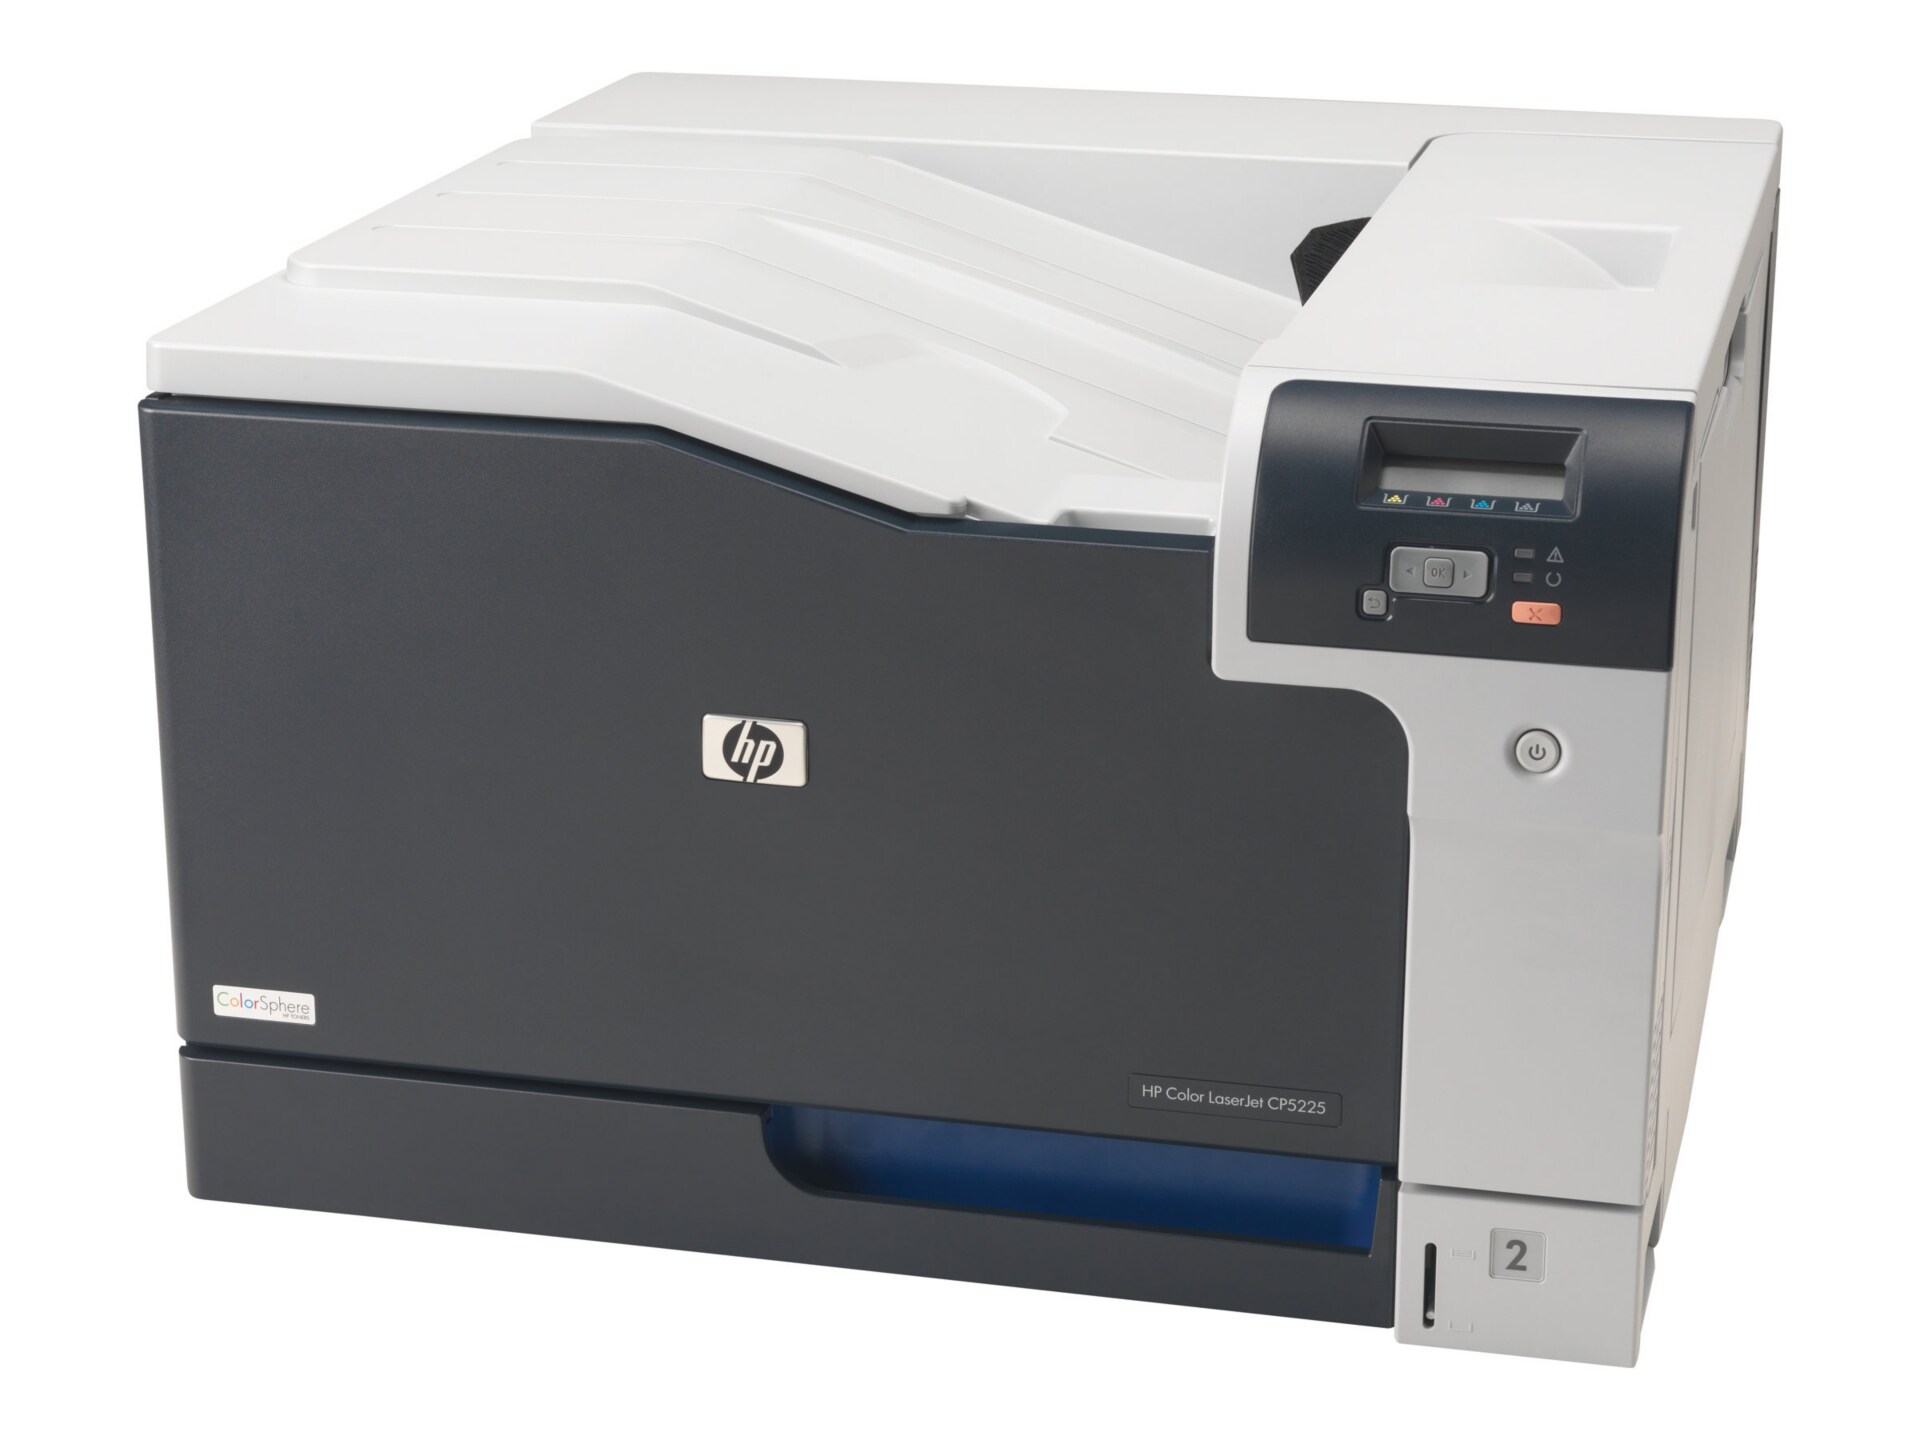 HP Color LaserJet Professional CP5225dn-printer-color-laser - recertified